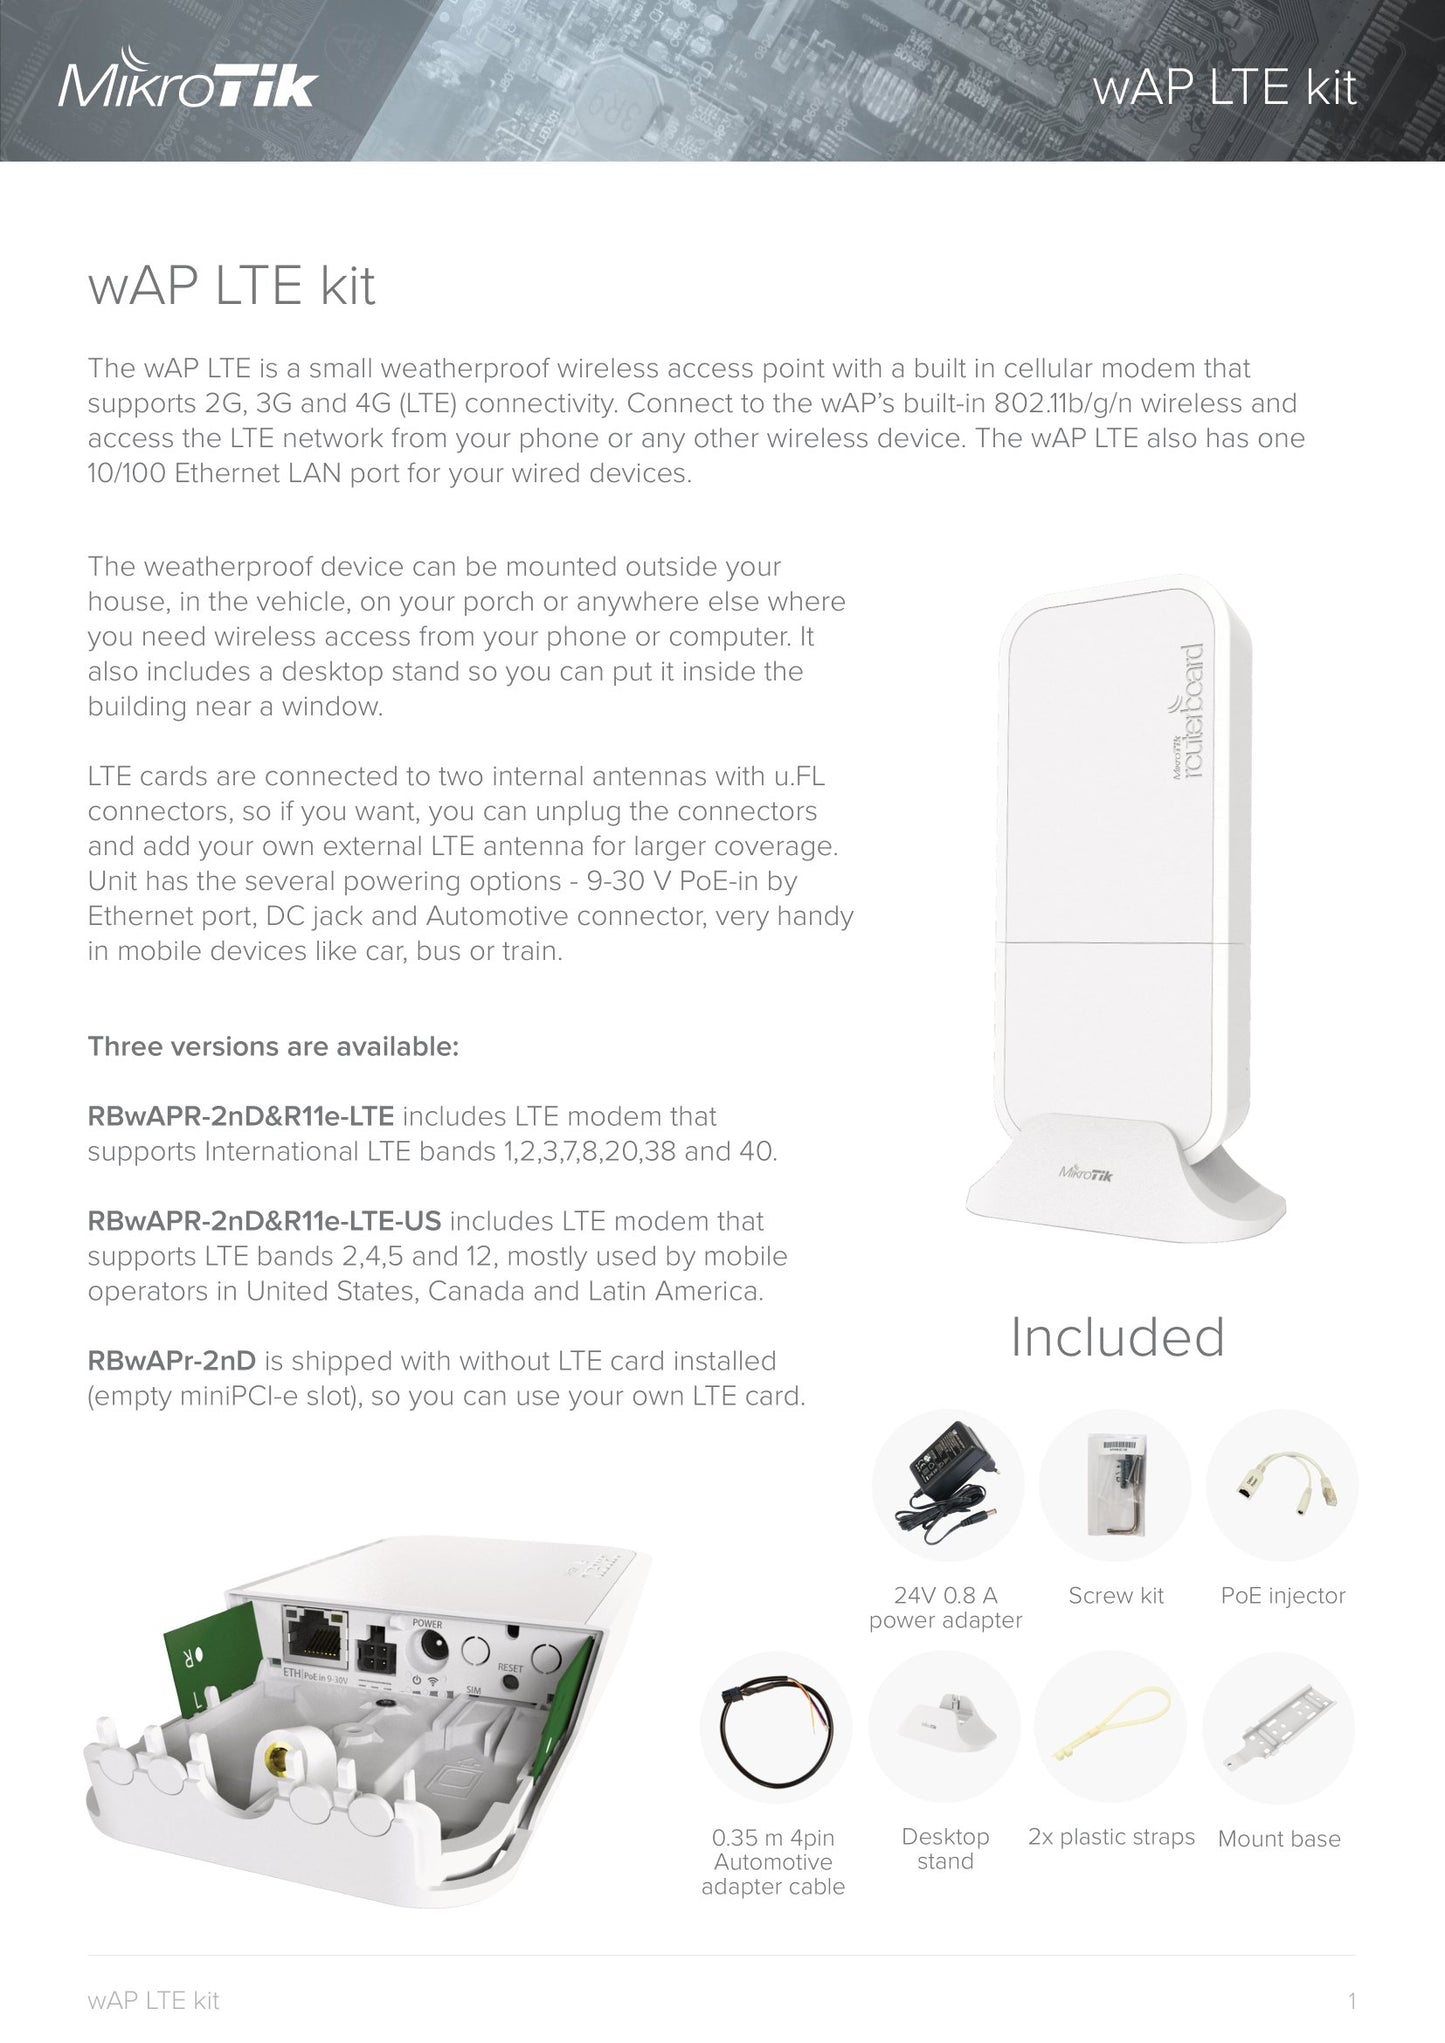 MikroTik wAP LTE Kit 2.4GHz Wireless Router with LTE Modem | RbwAPR-2nD&R11e-LTE